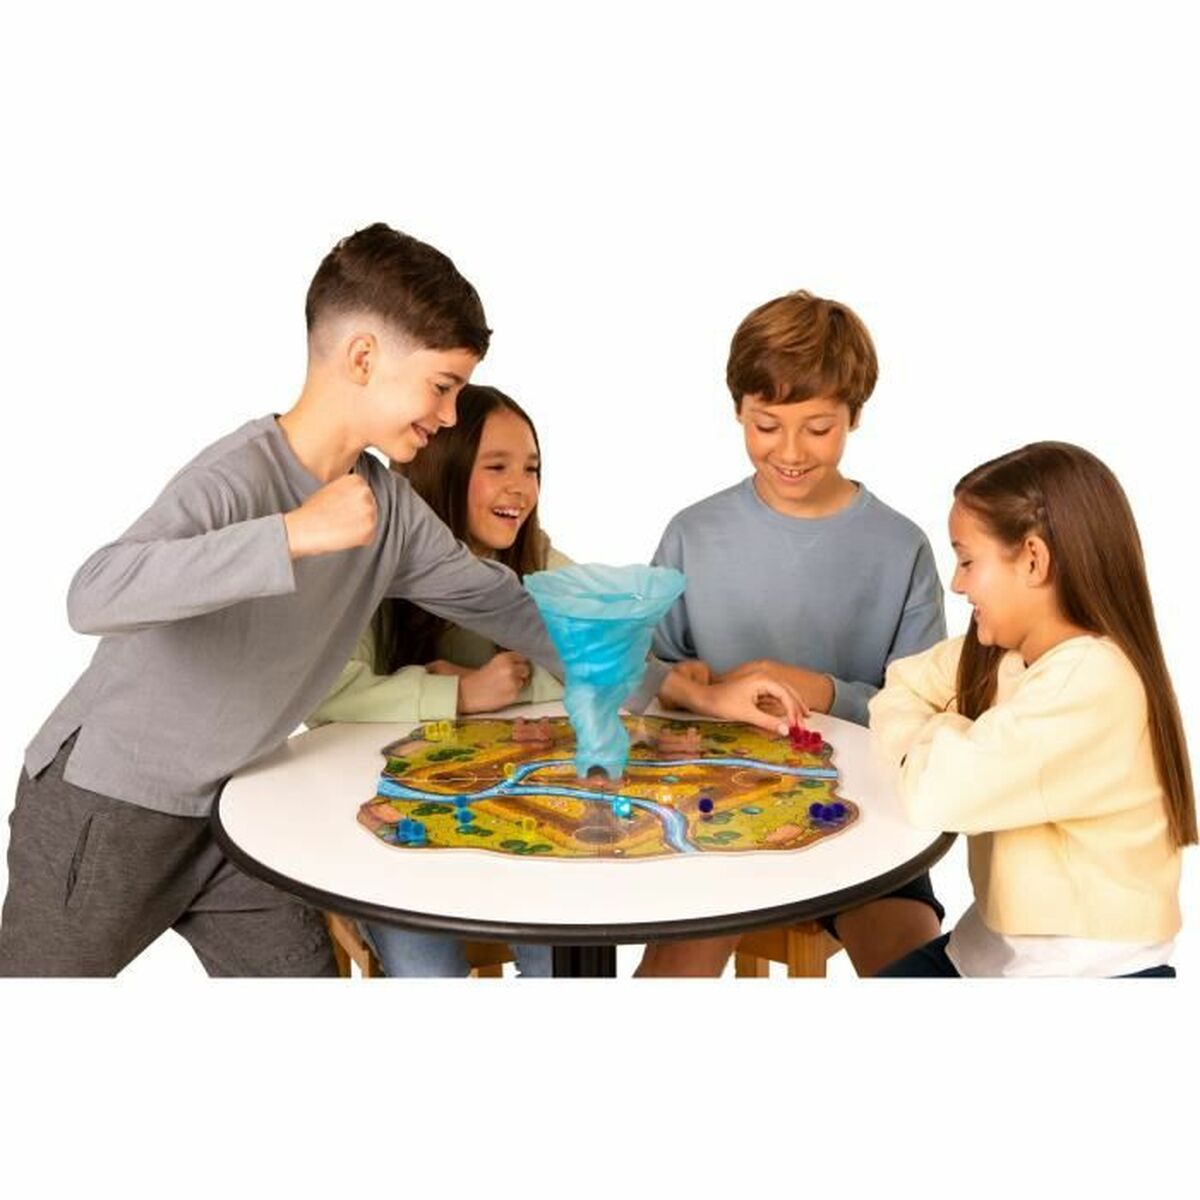 Board game IMC Toys Tornado Force (FR) - Little Baby Shop